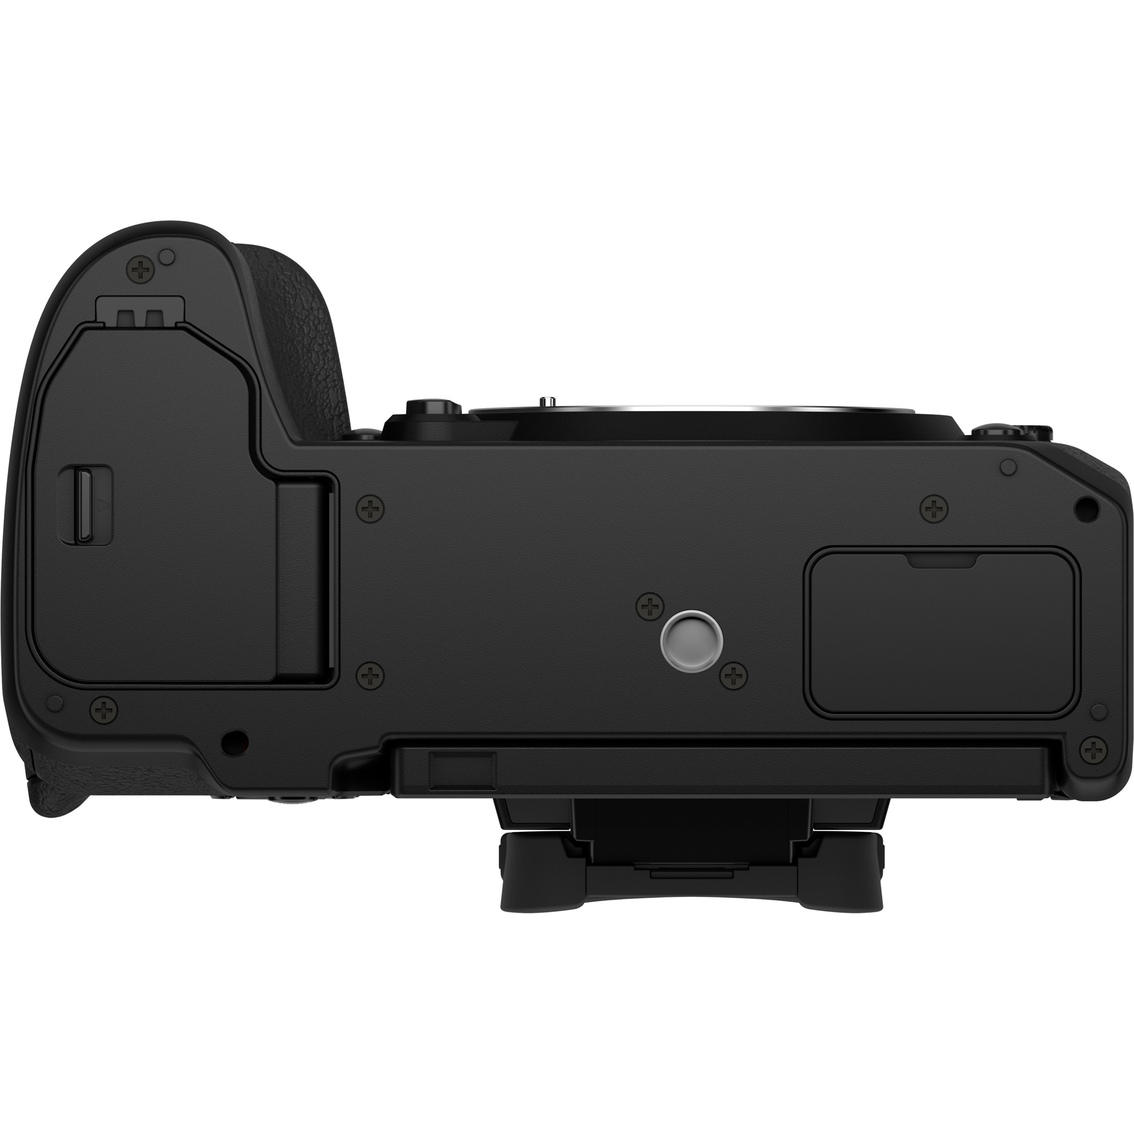 Fujifilm XH2S Camera Body, Black - Image 9 of 10